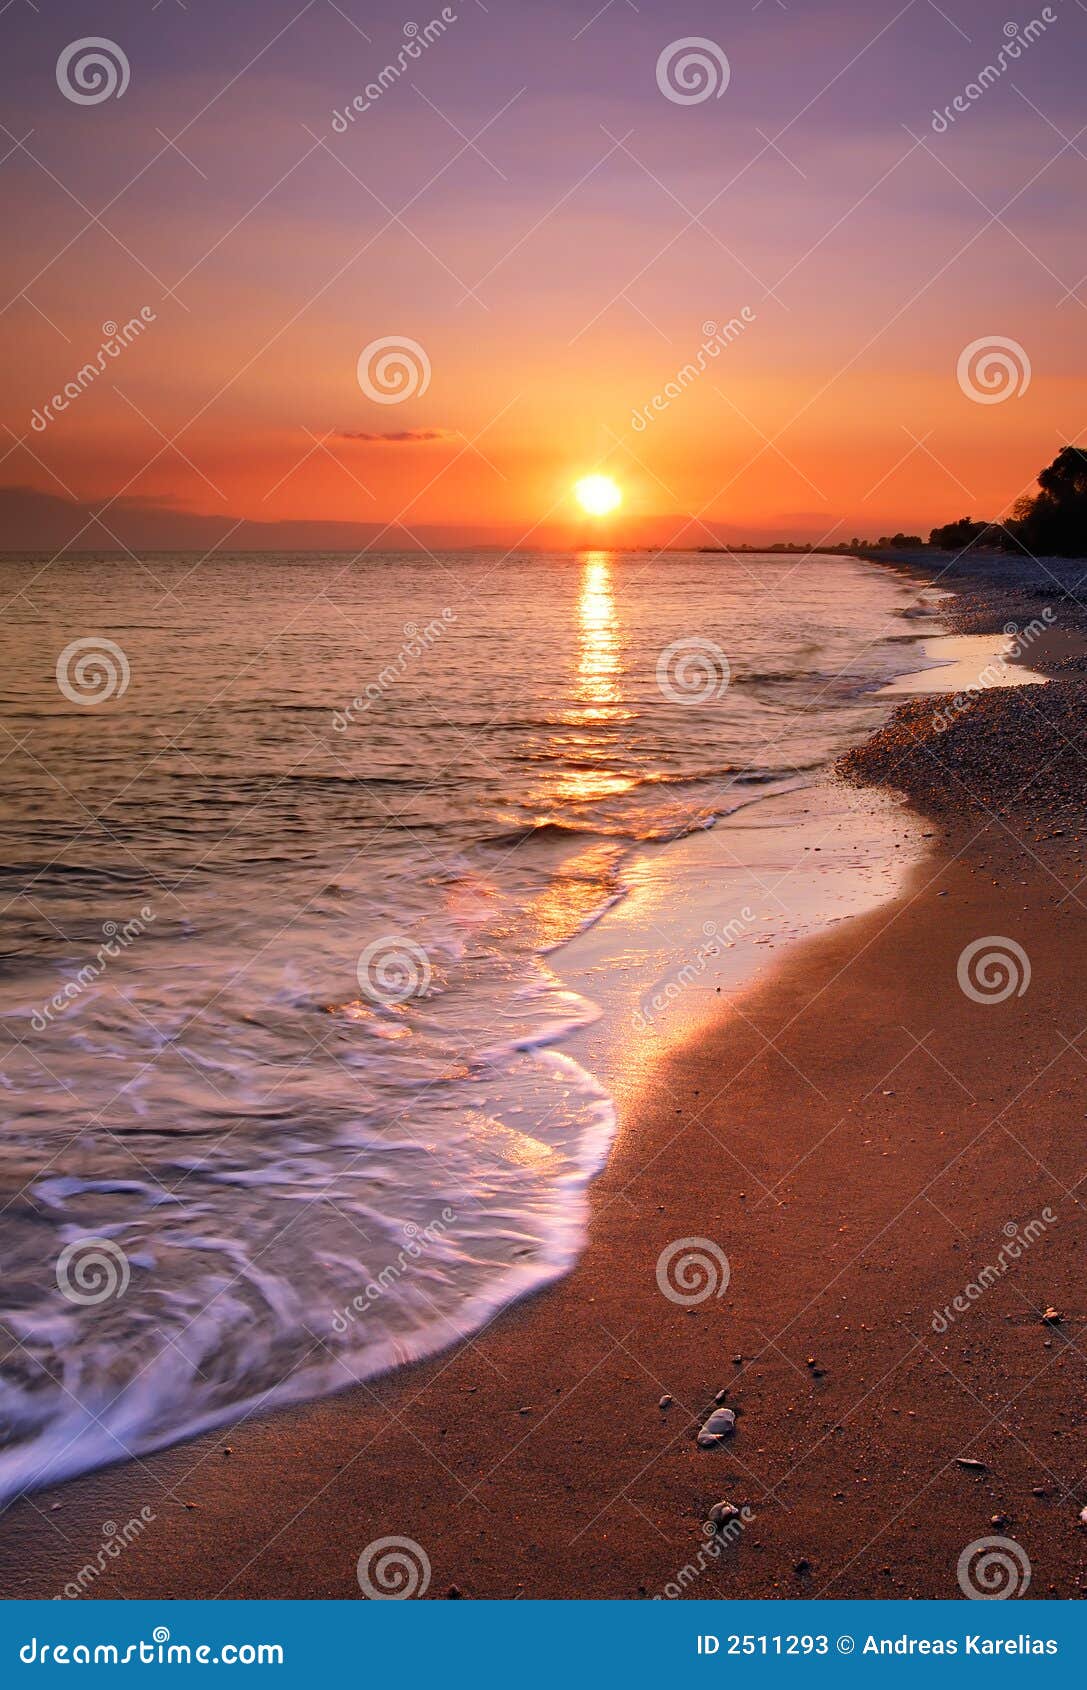 deserted beach at sunset